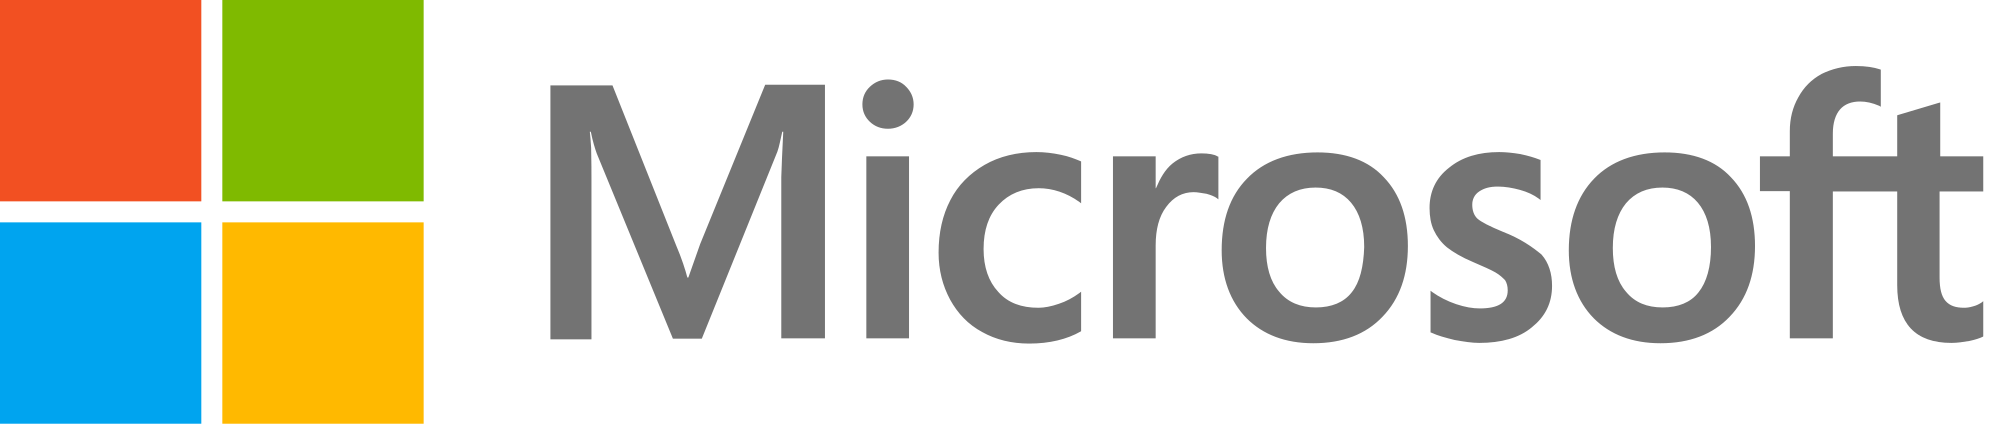 microsoft logo images png